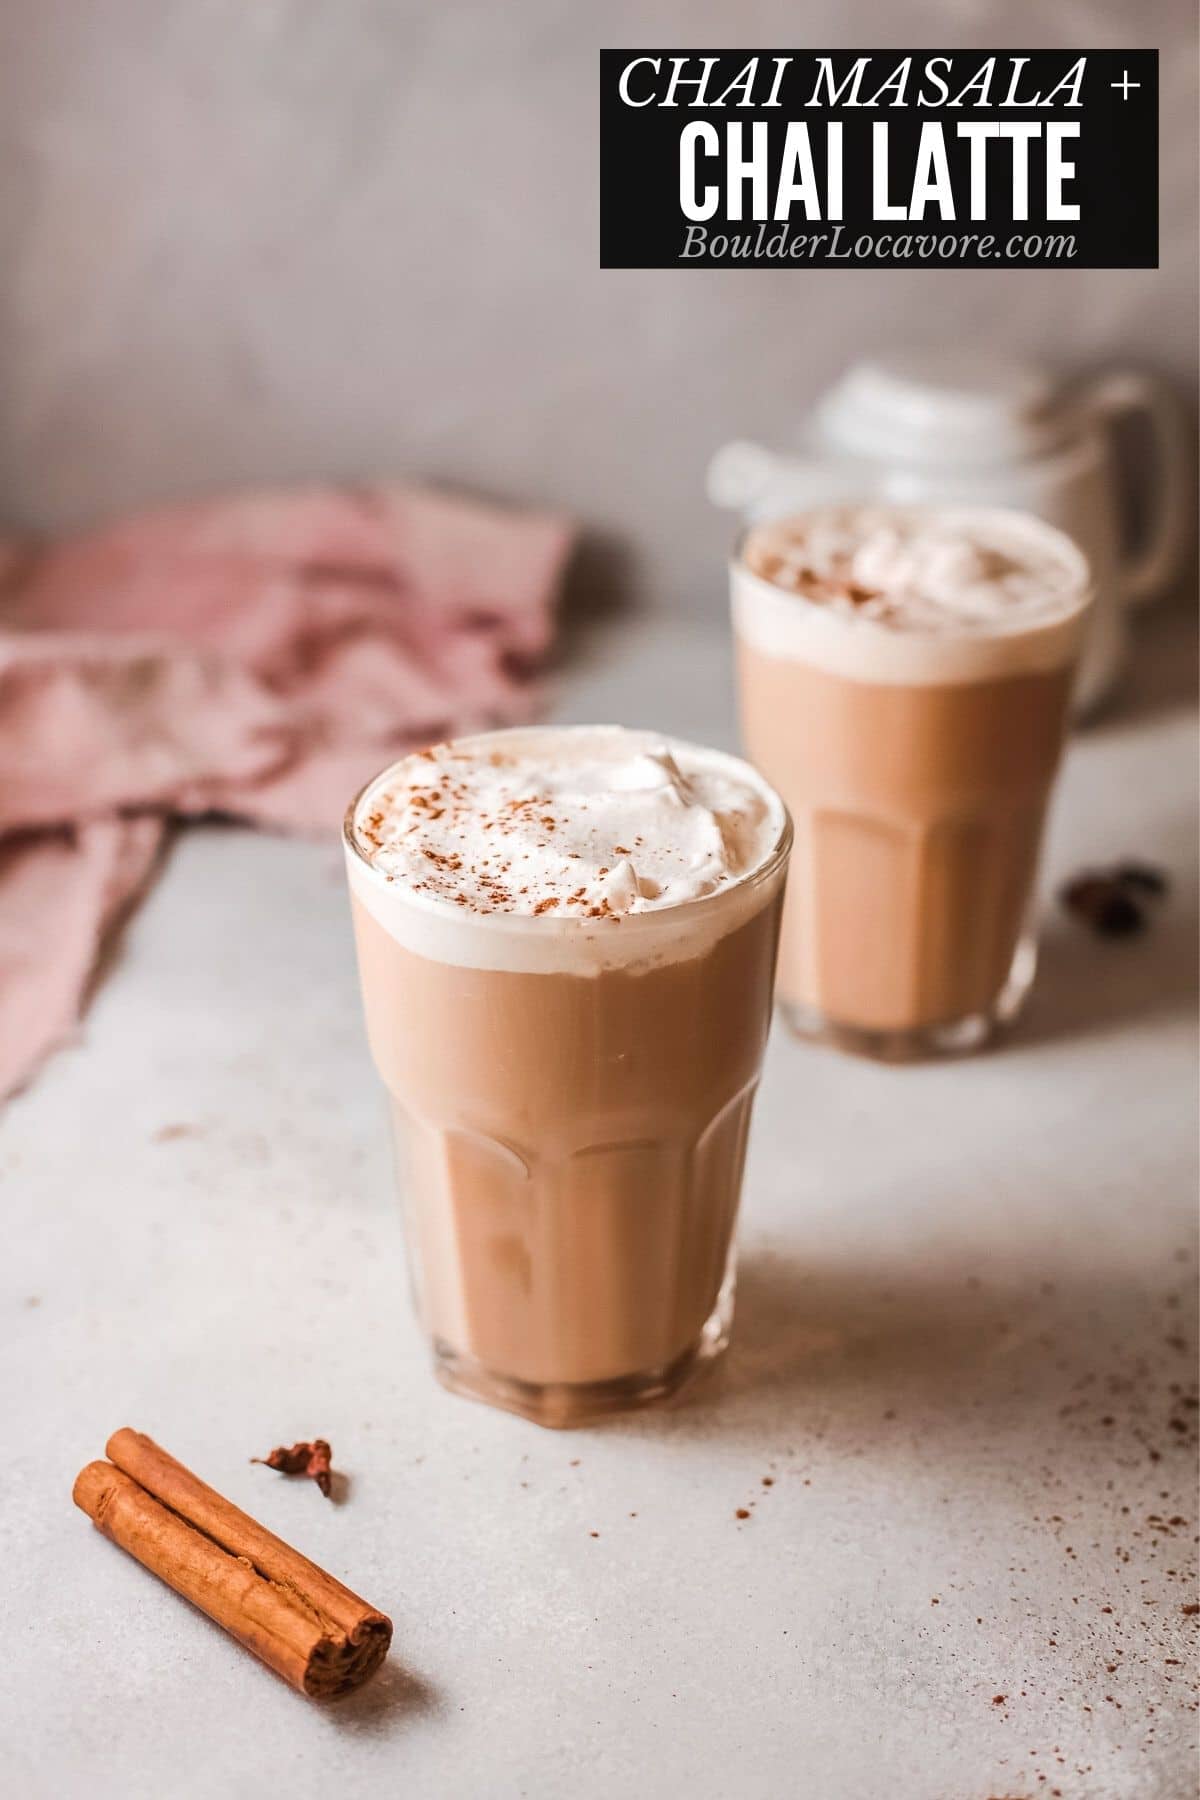 Chai Masala and latte title image